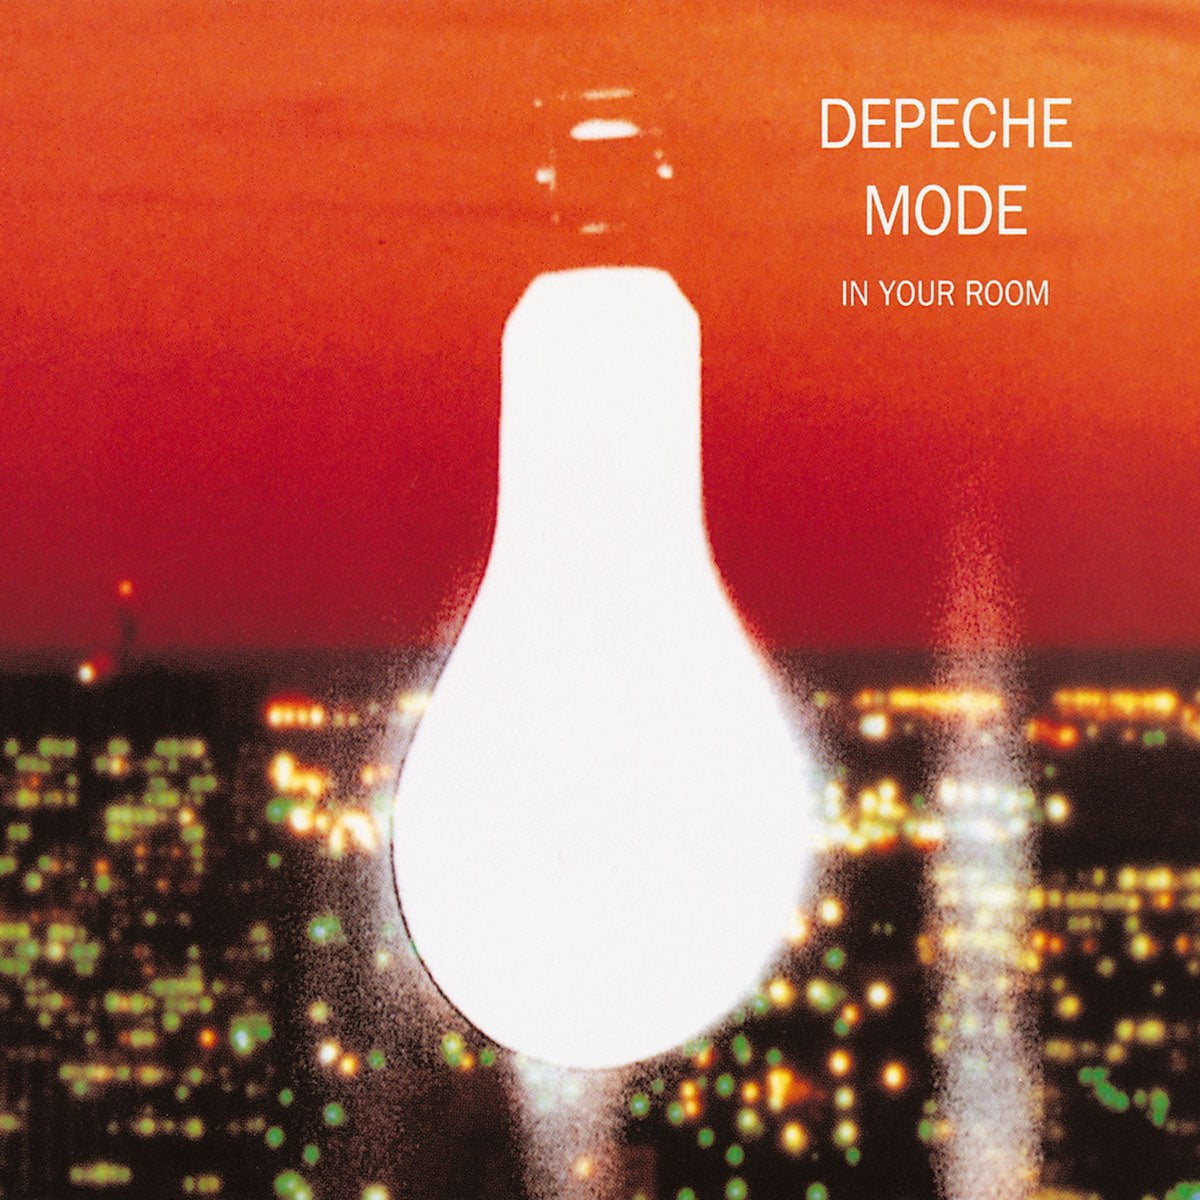 Depeche Mode Album Cover Art